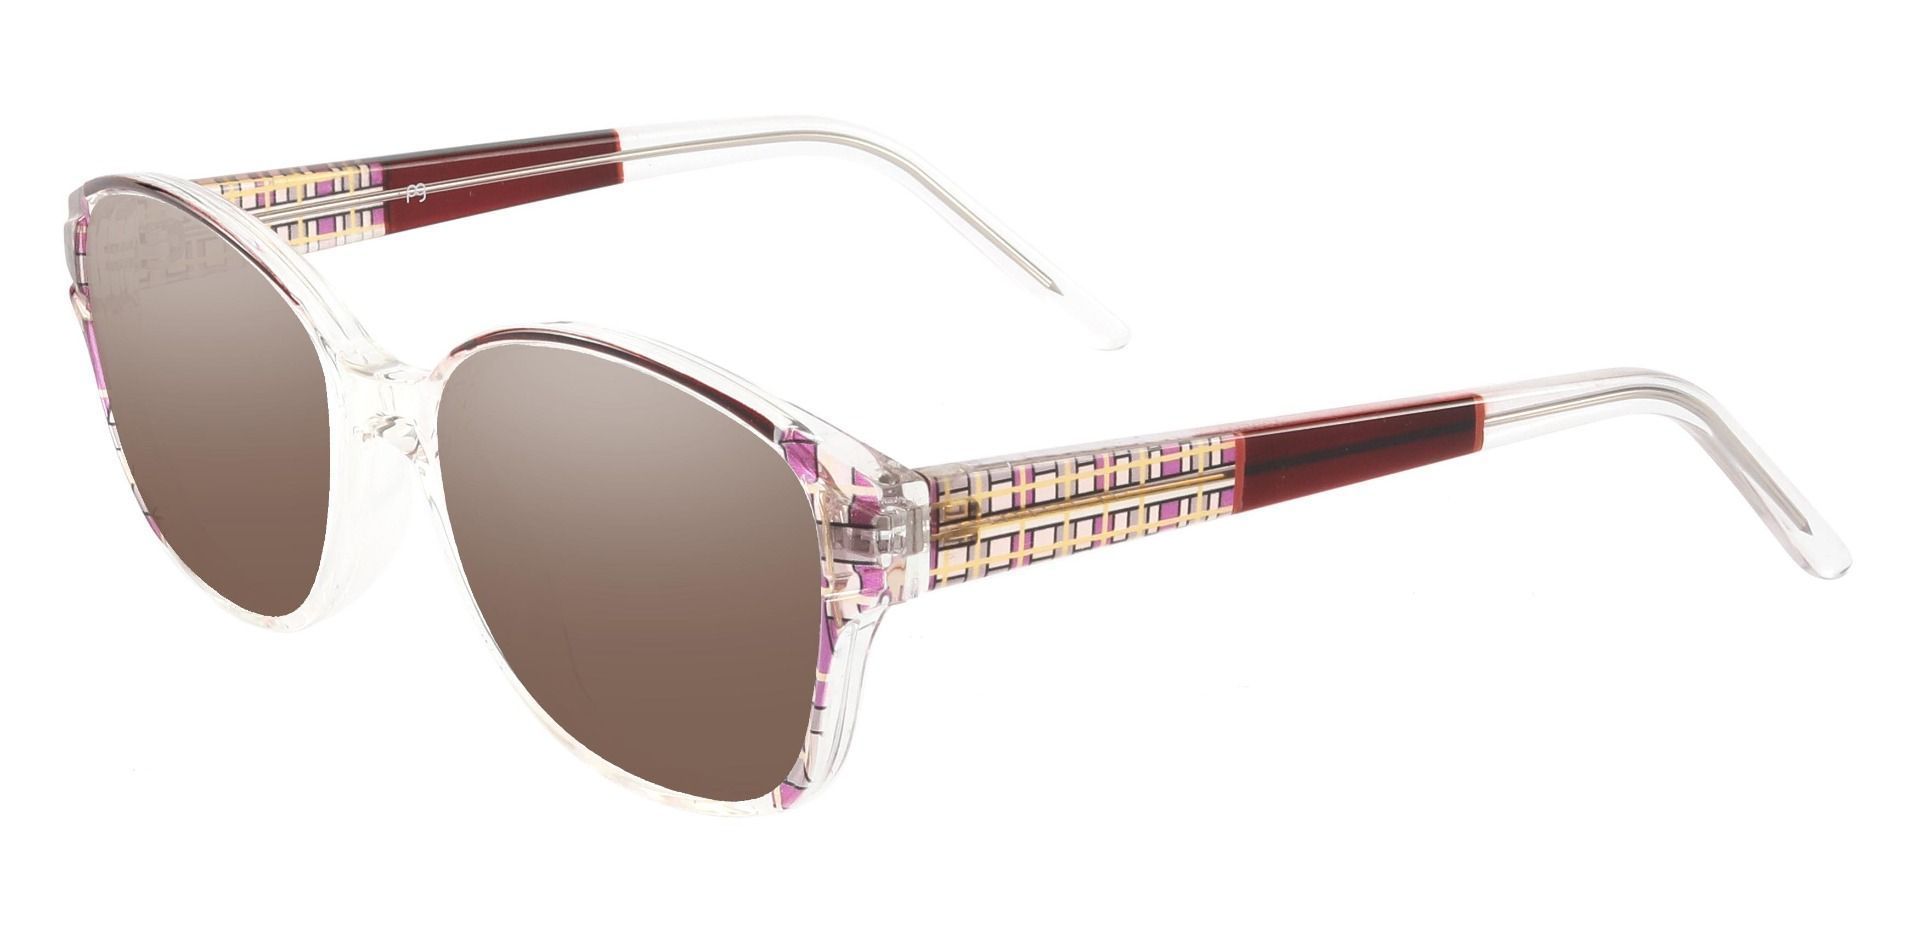 Moira Oval Progressive Sunglasses - Pink Frame With Brown Lenses